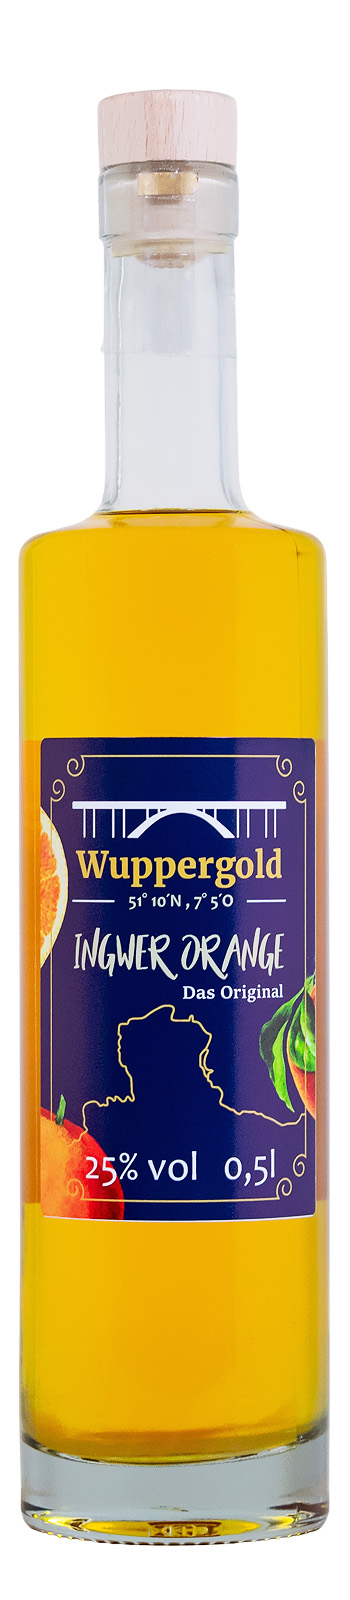 Wuppergold Ingwer Orange - 0,5L 25% vol